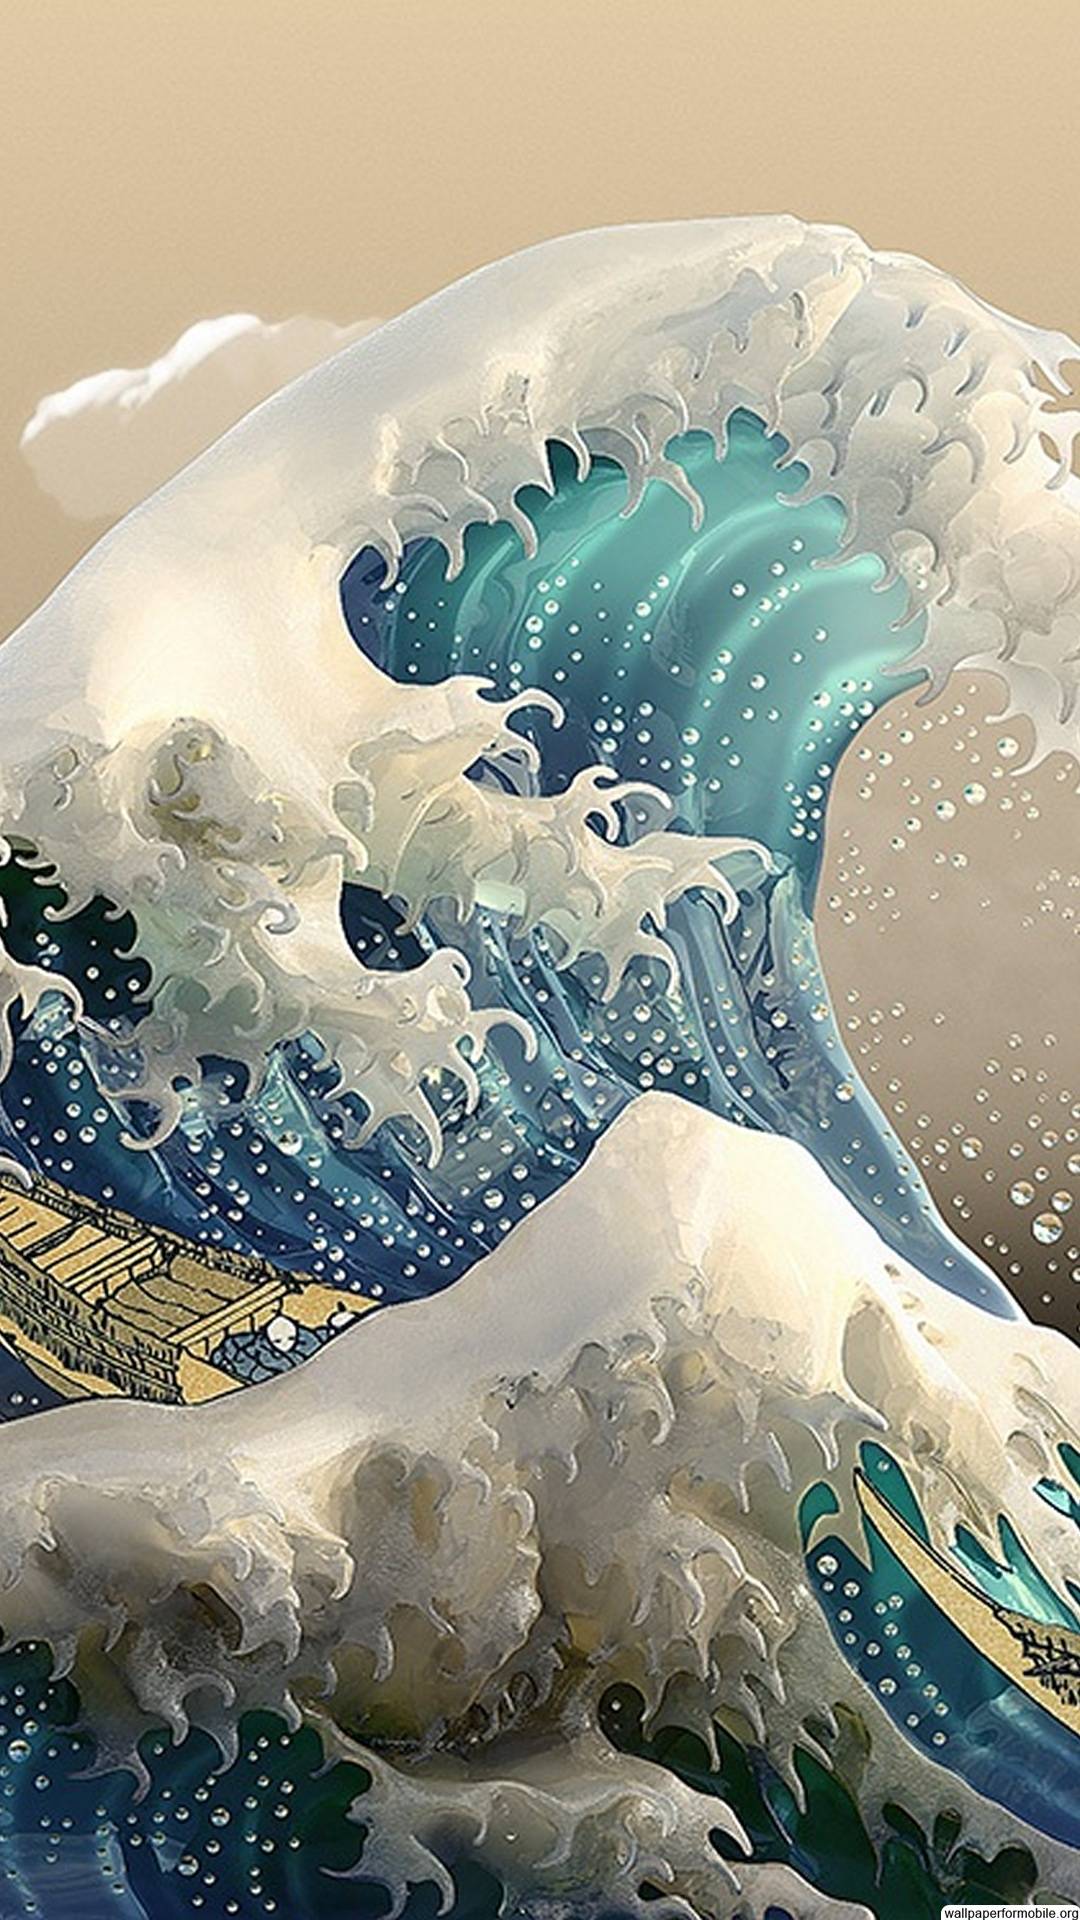 The Great Wave Off Kanagawa HD Wallpapers - Wallpaper Cave